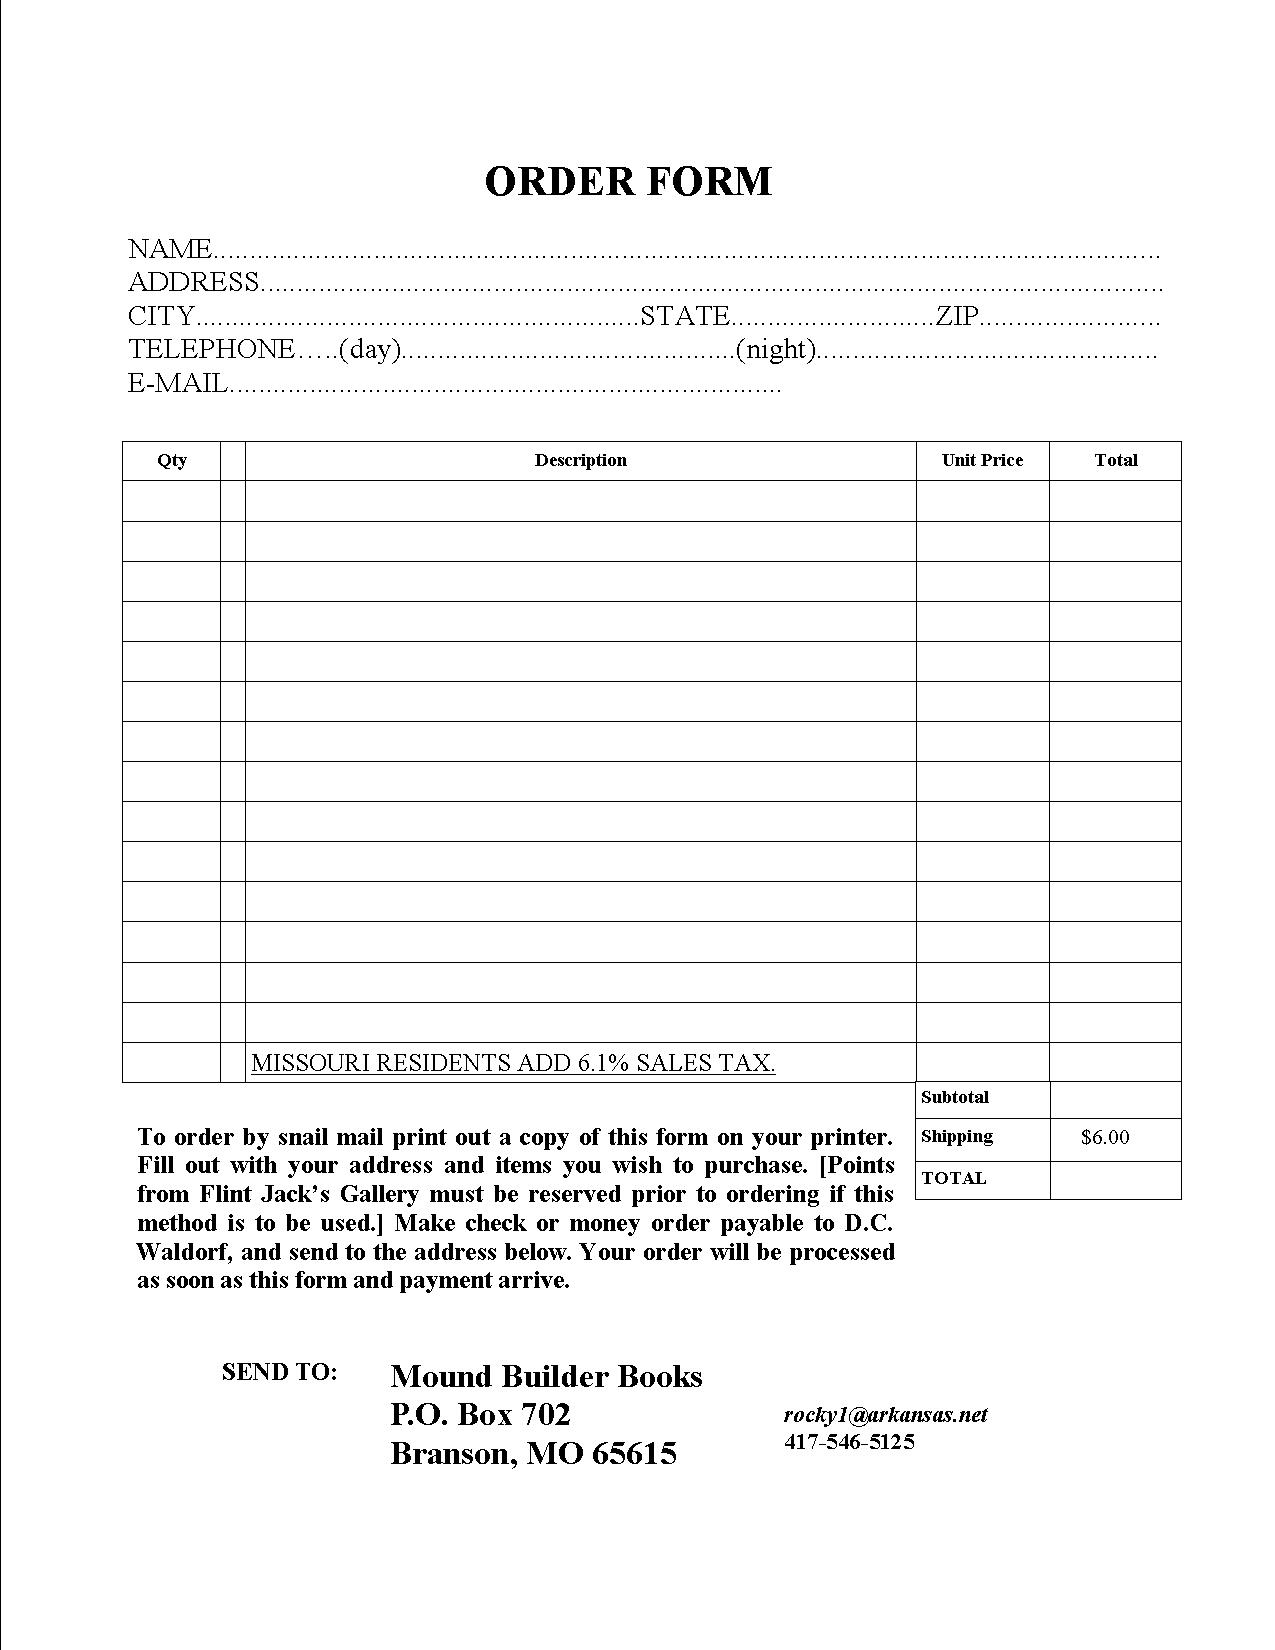 Printable Order Form : D. C. Waldorf Flintknapping Web Site, Home of ...